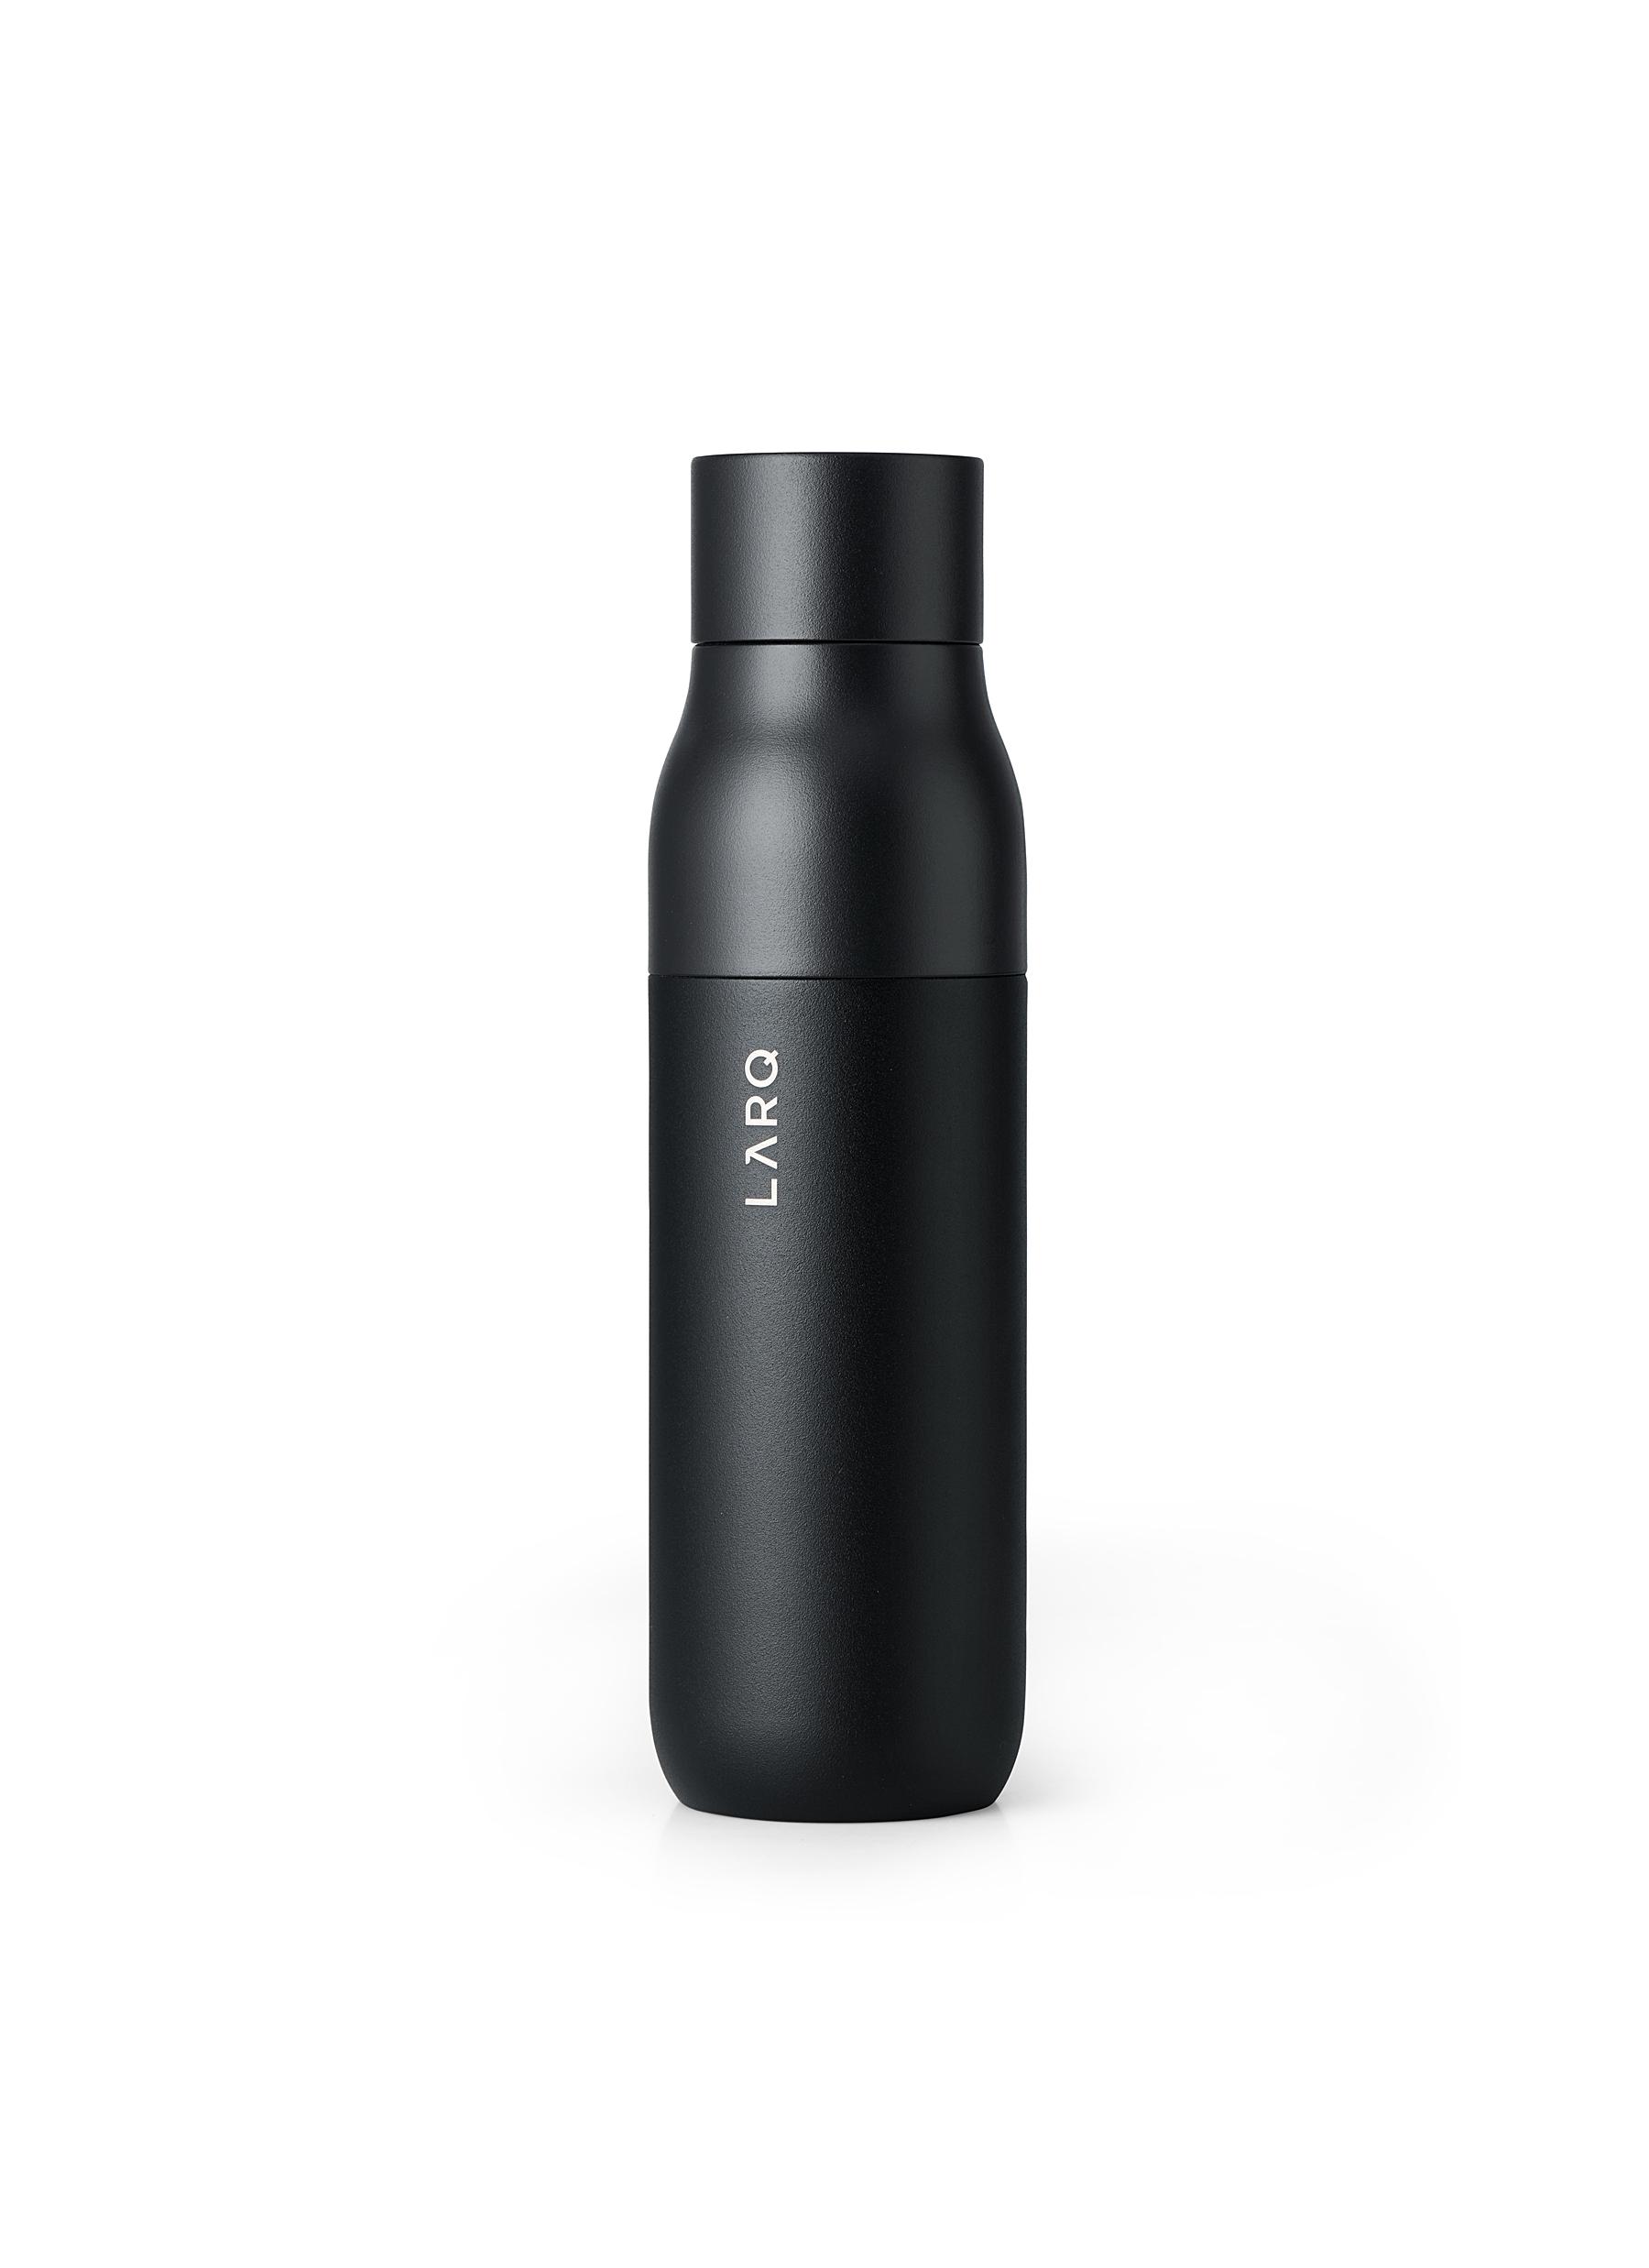 LARQ Digital purification bottle - Obsidian Black